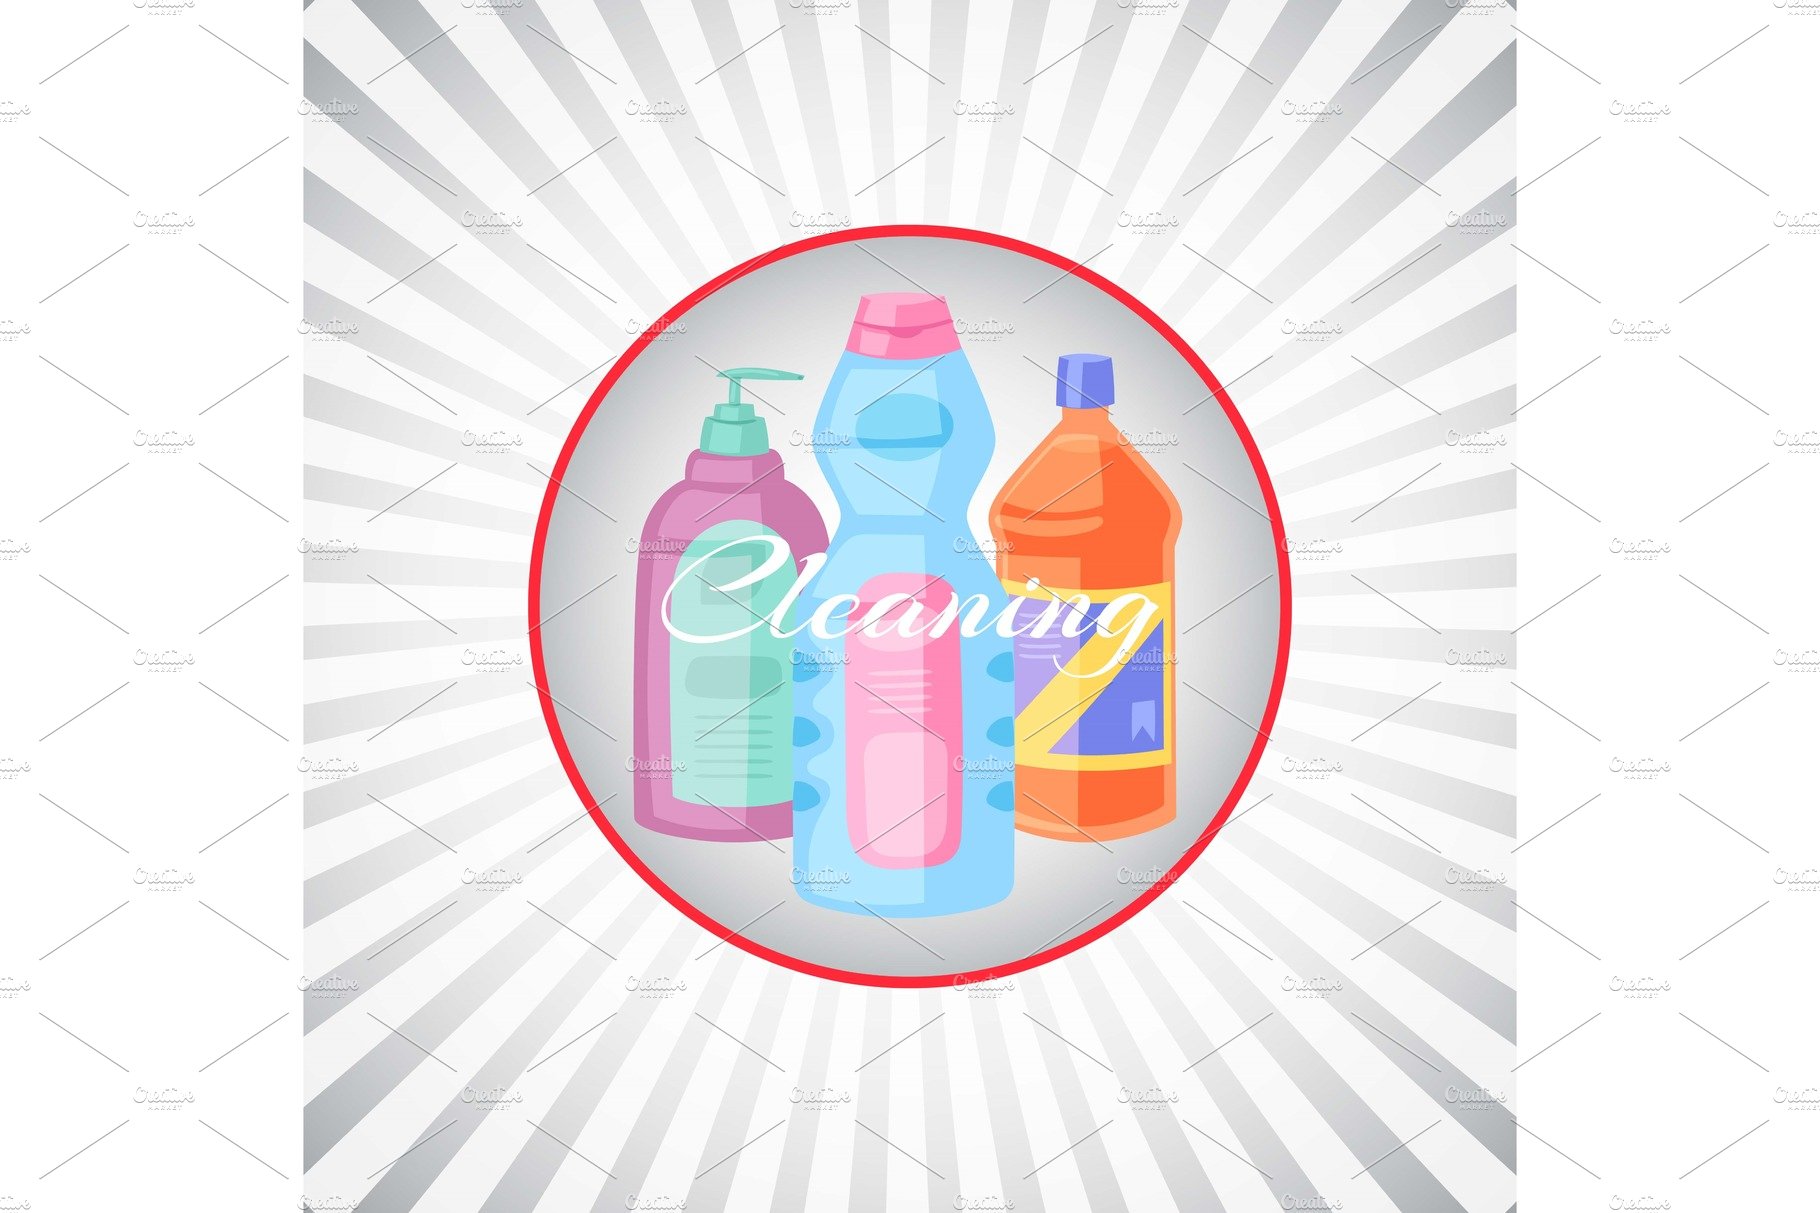 Detergent, housework equipment cover image.